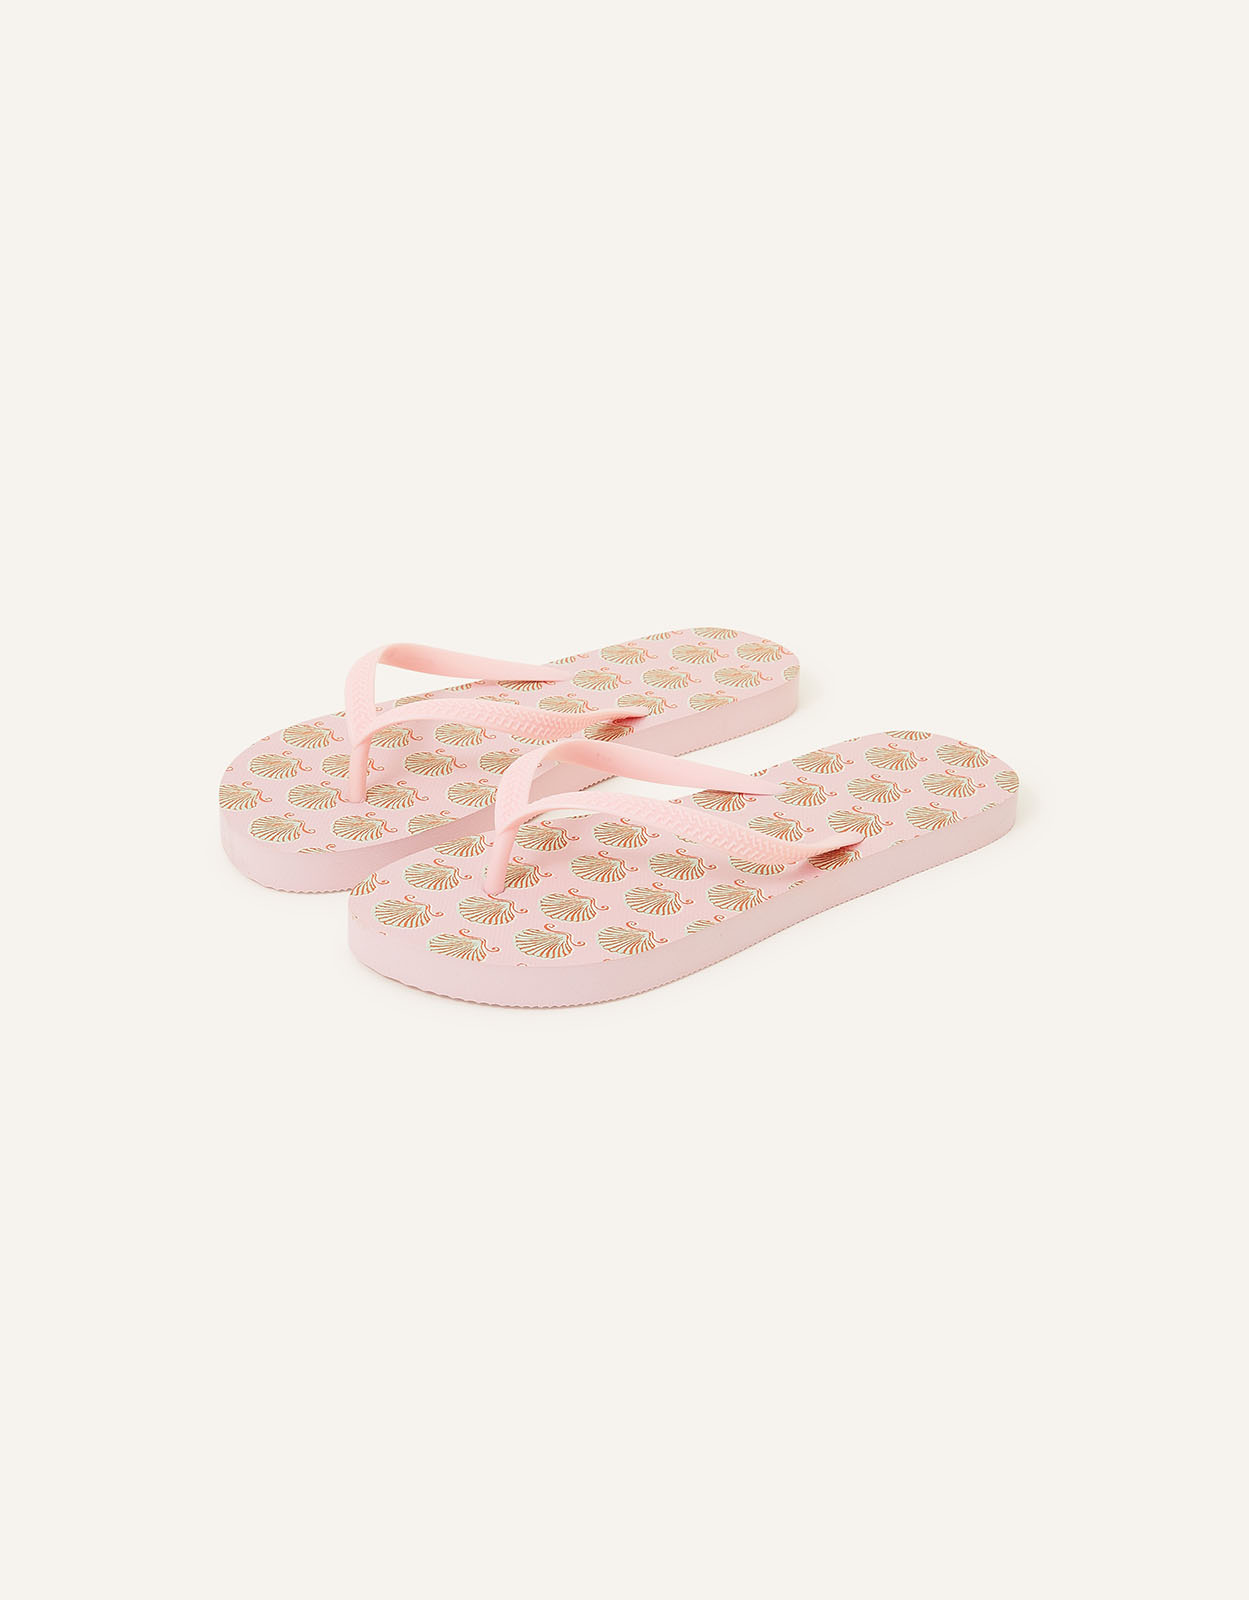 Accessorize Women's Pink Classic Shell Print Flip Flops, Size: S